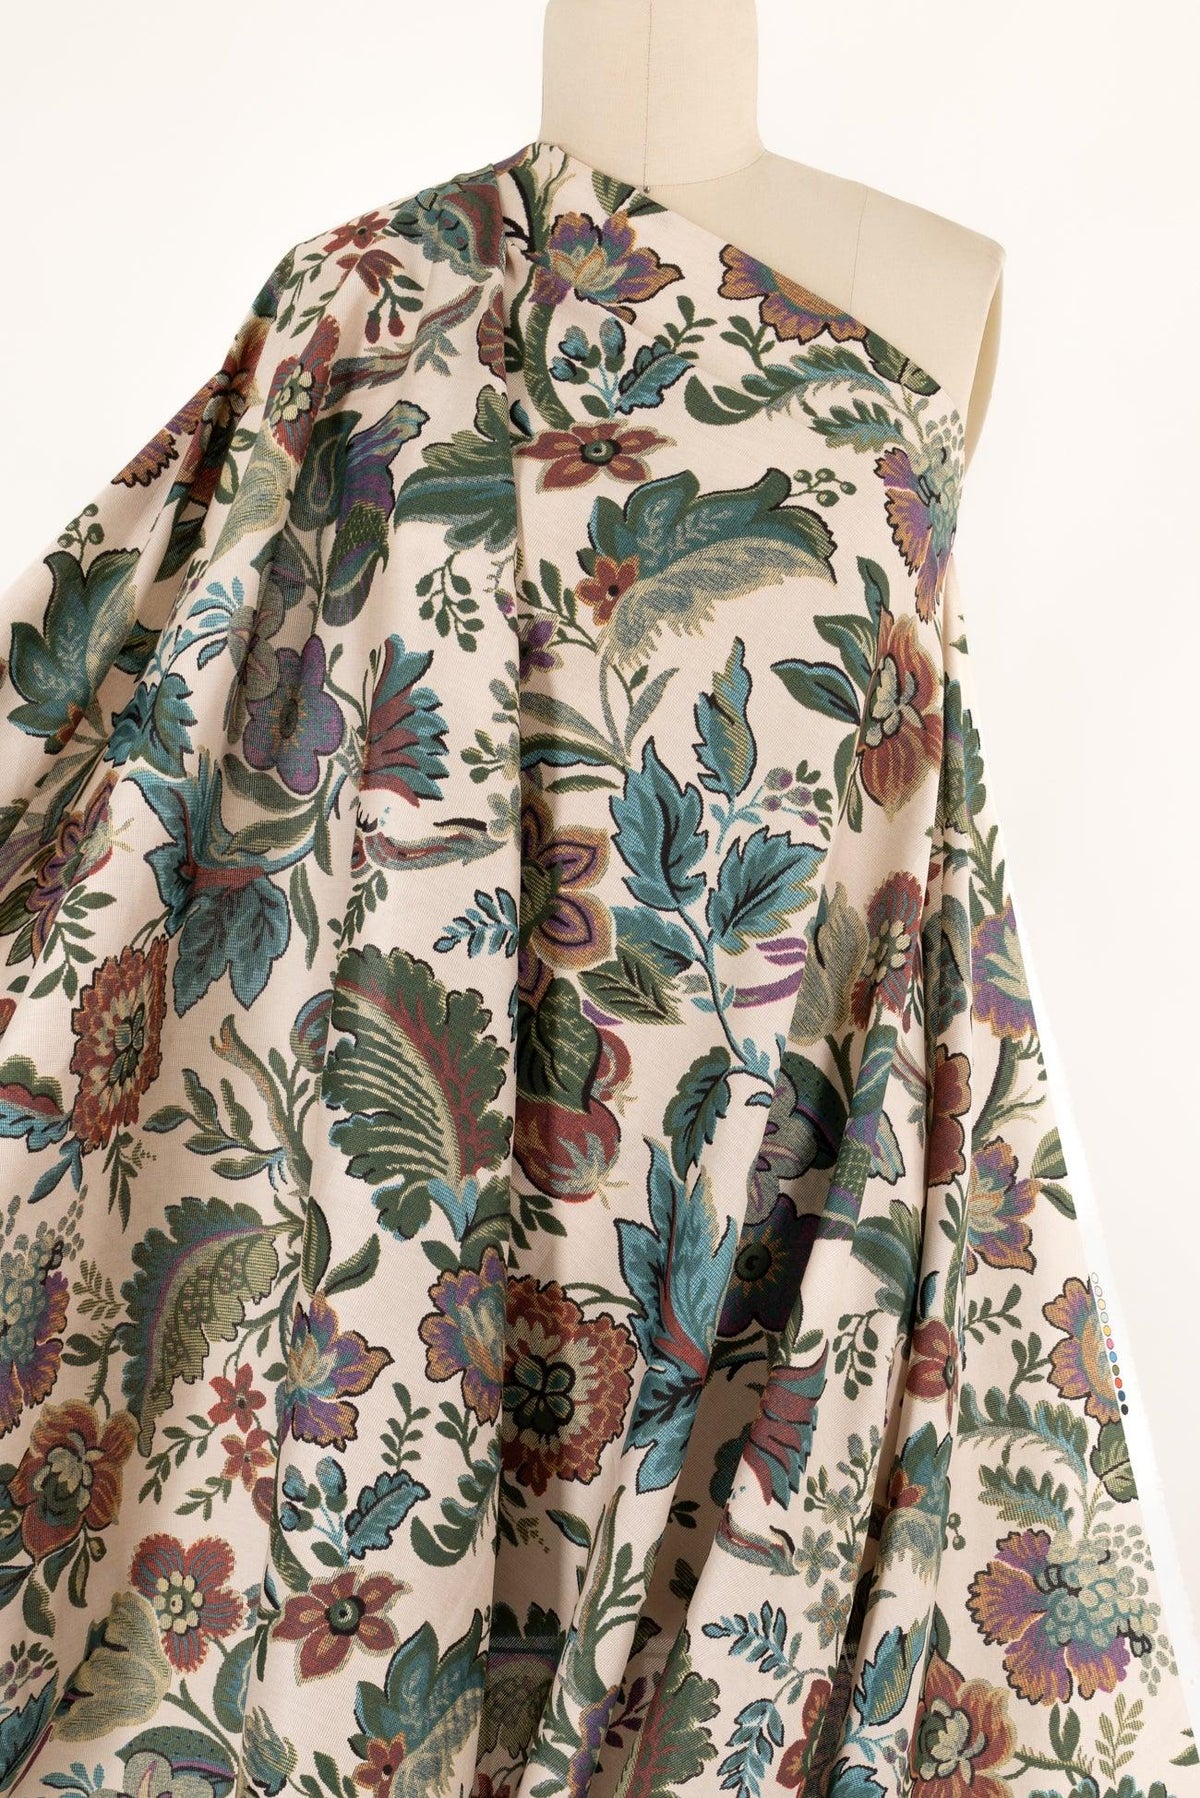 Esme Japanese Cotton Woven - Marcy Tilton Fabrics